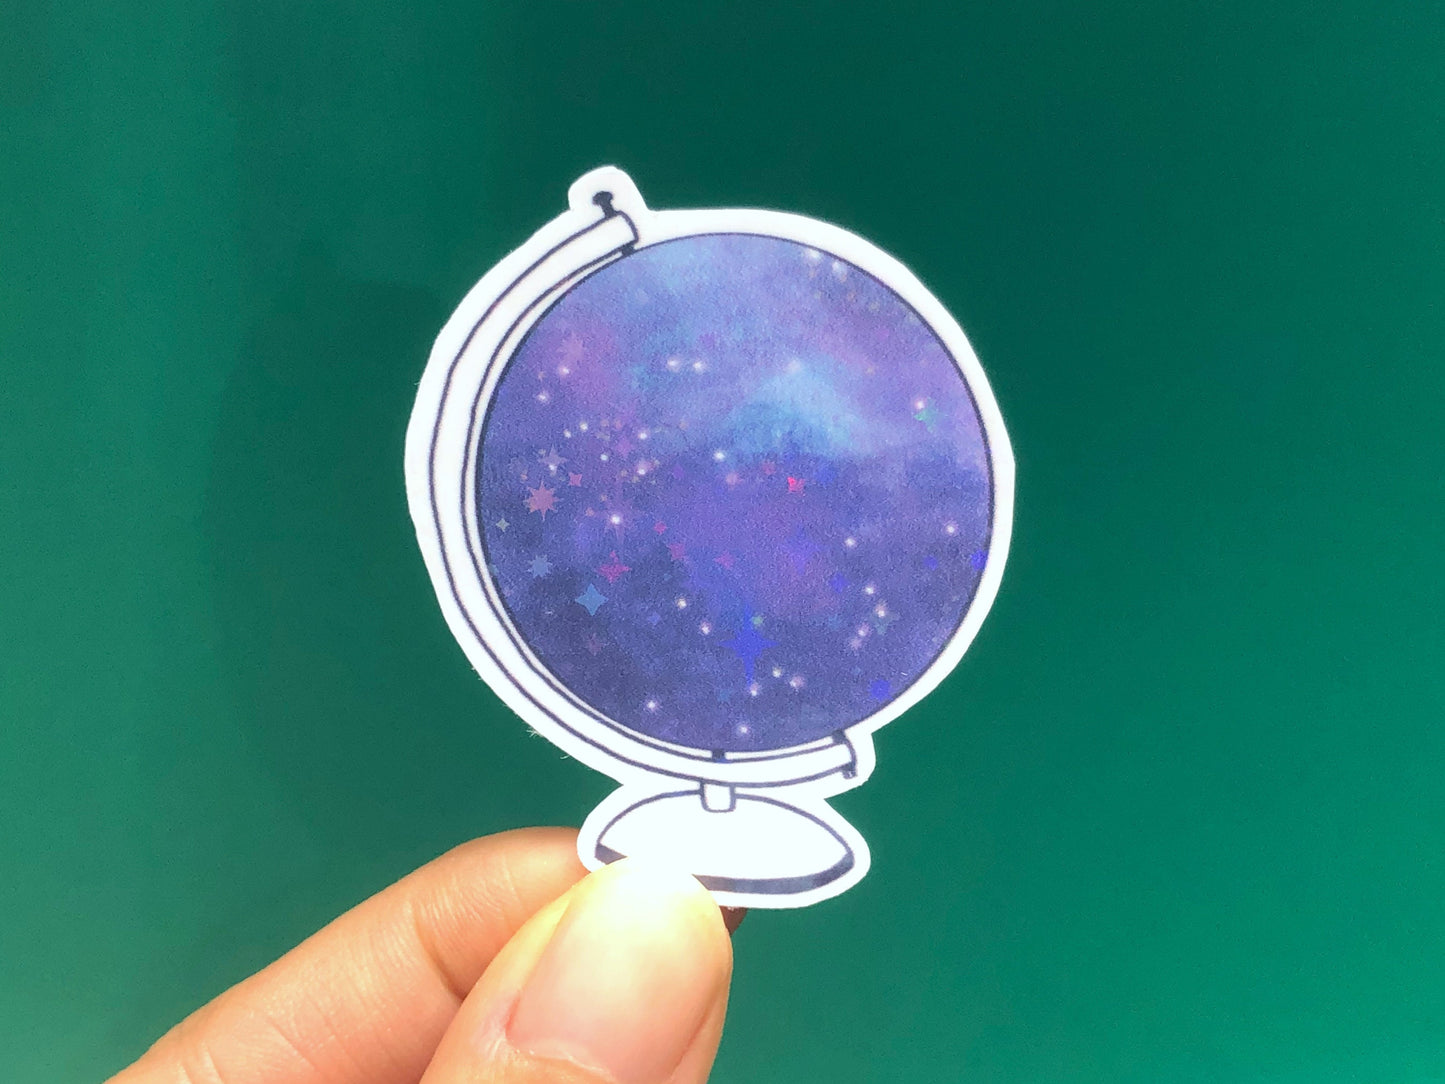 Galaxy Globe Sticker | Holographic Sticker | Space Laptop Decal